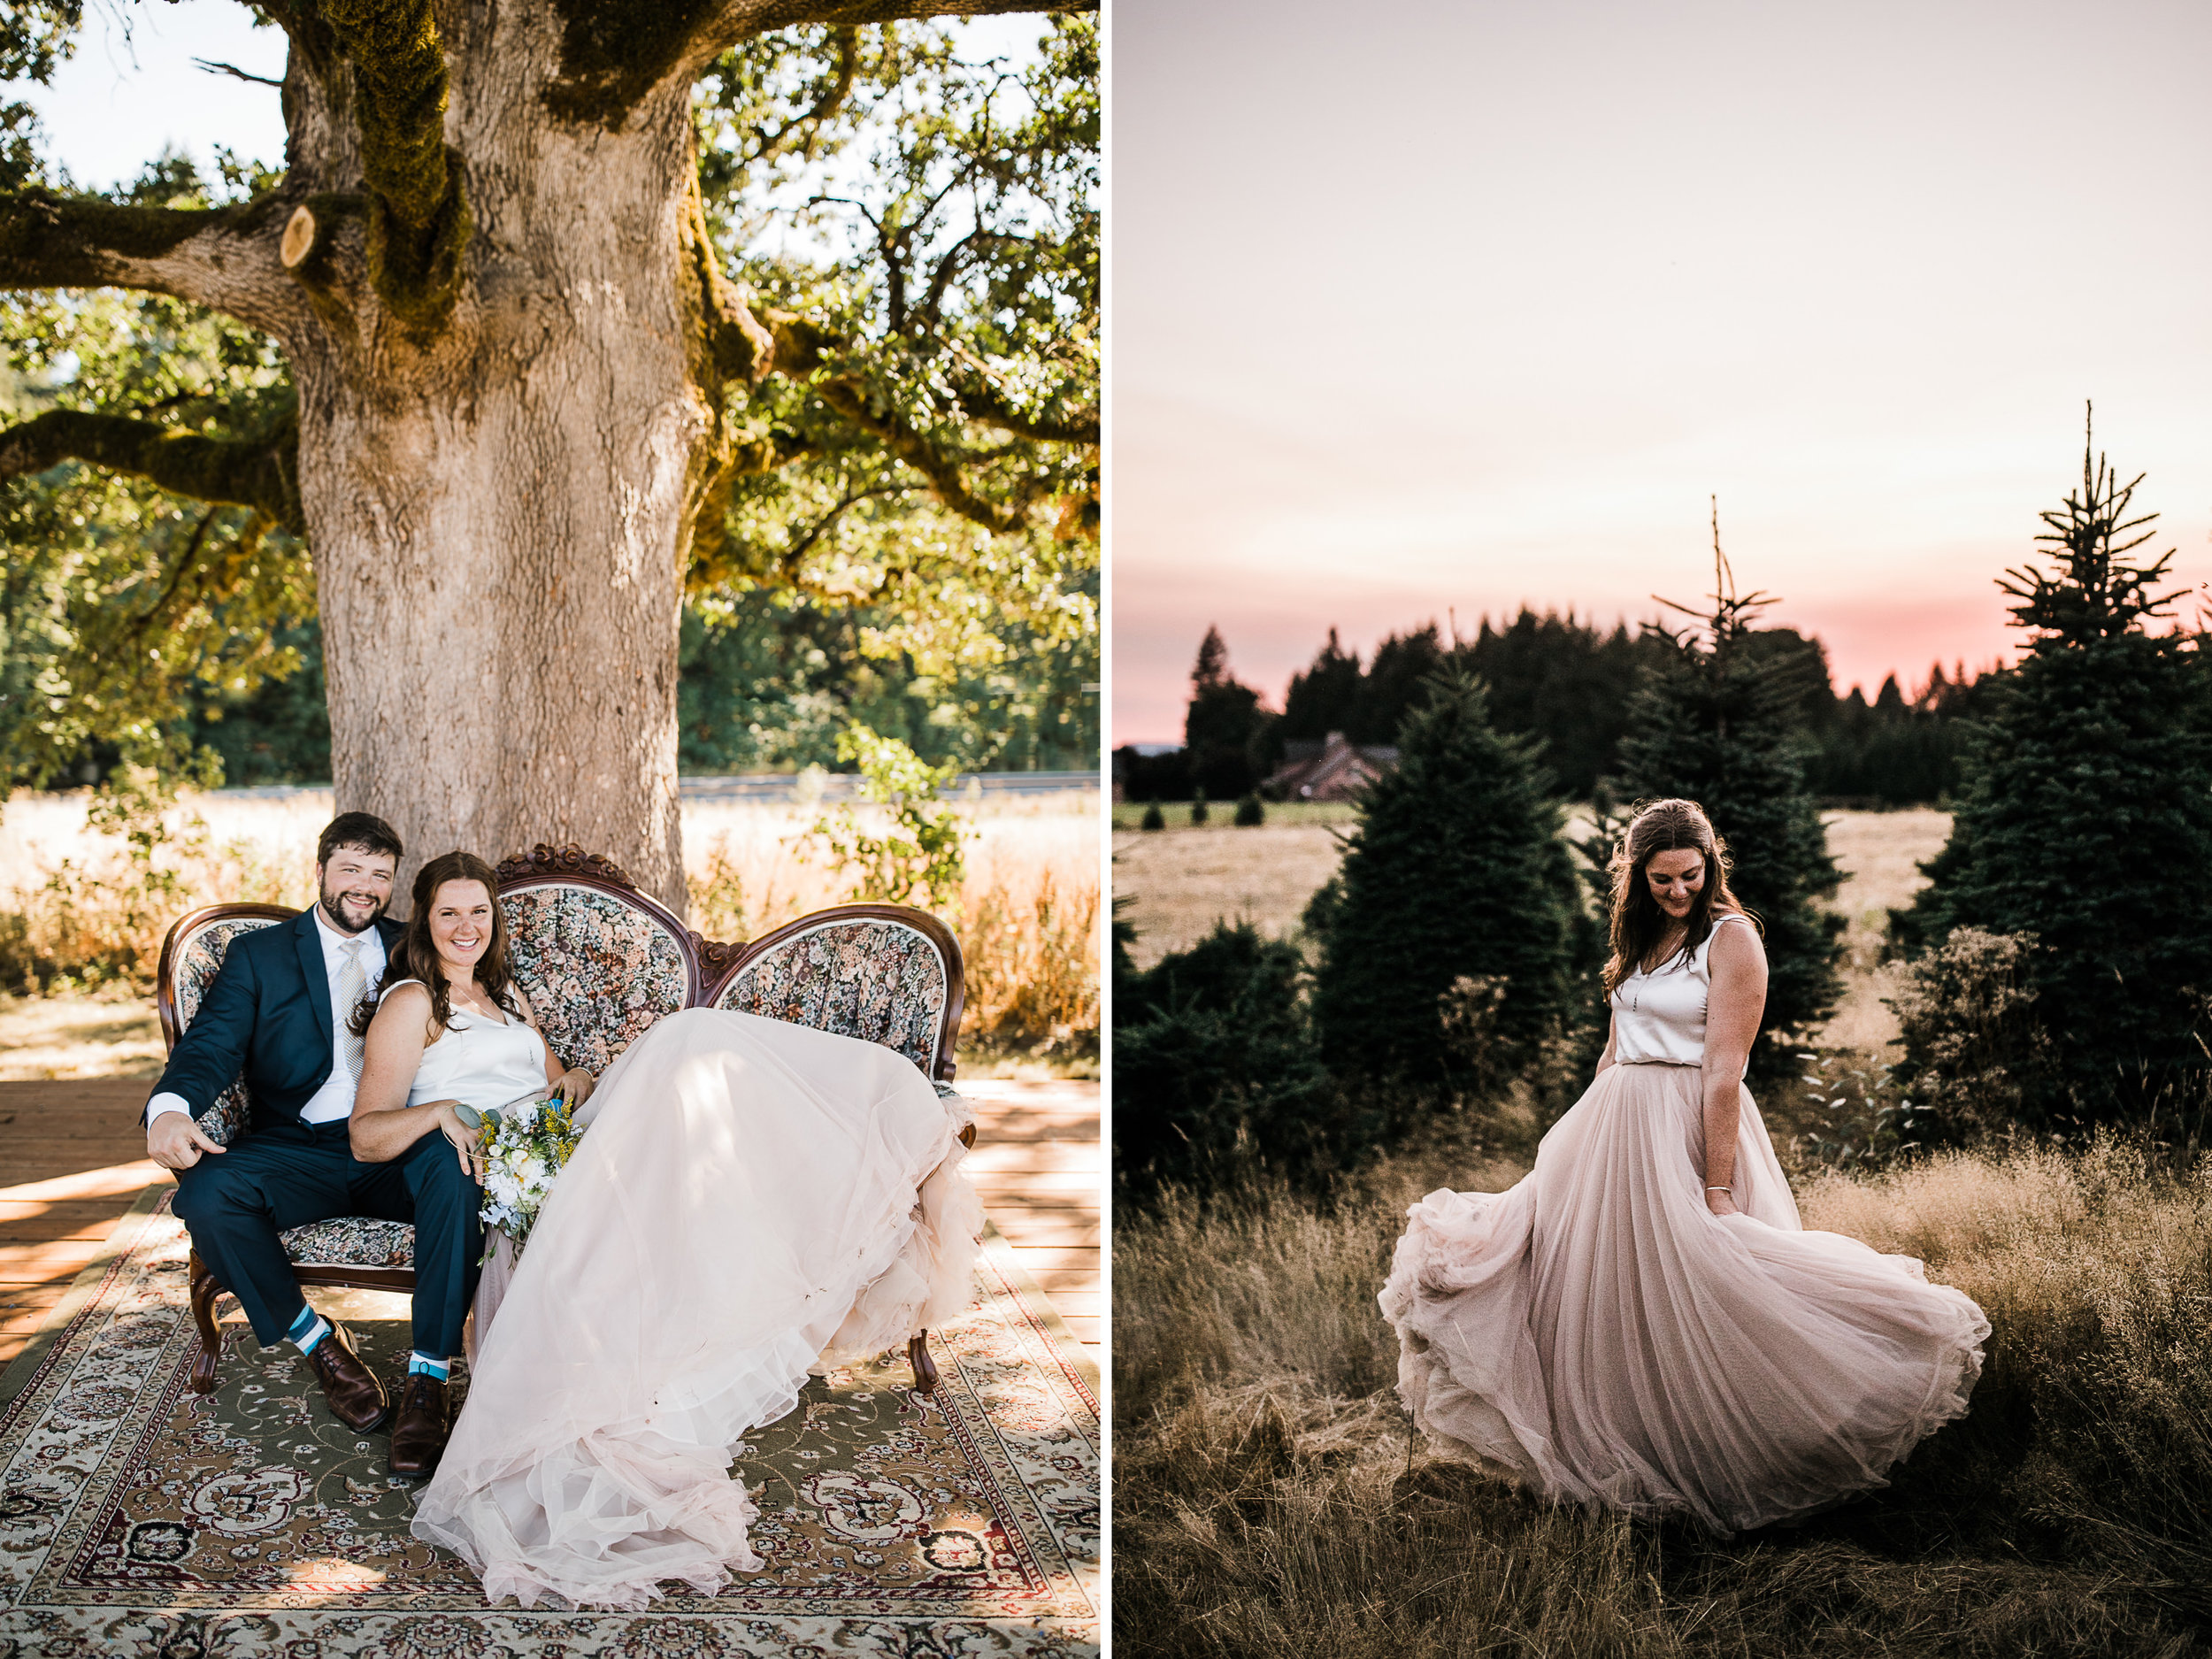 kati + joe's riverside wedding | adeline farms in woodland, washington | washington adventure wedding photographer